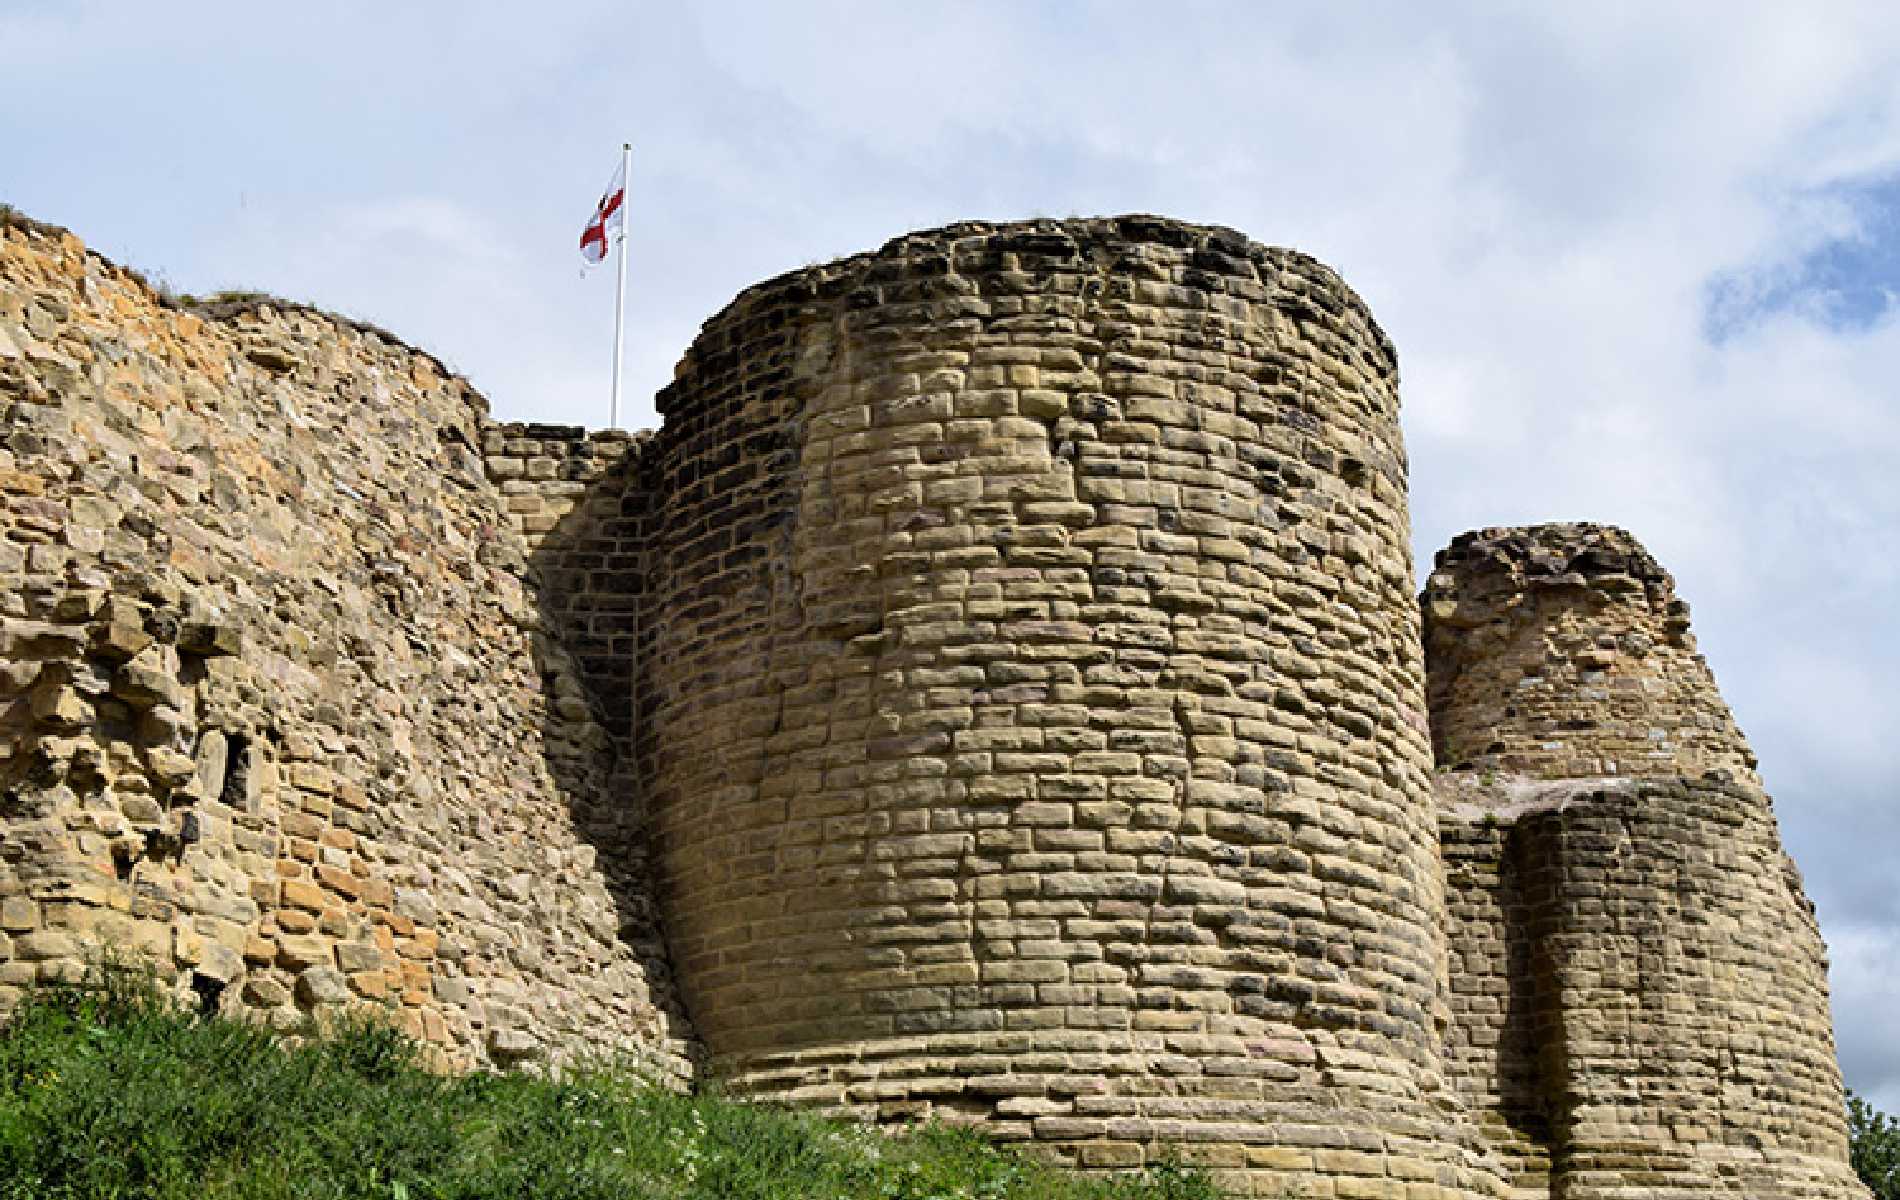 Pontefract Castle